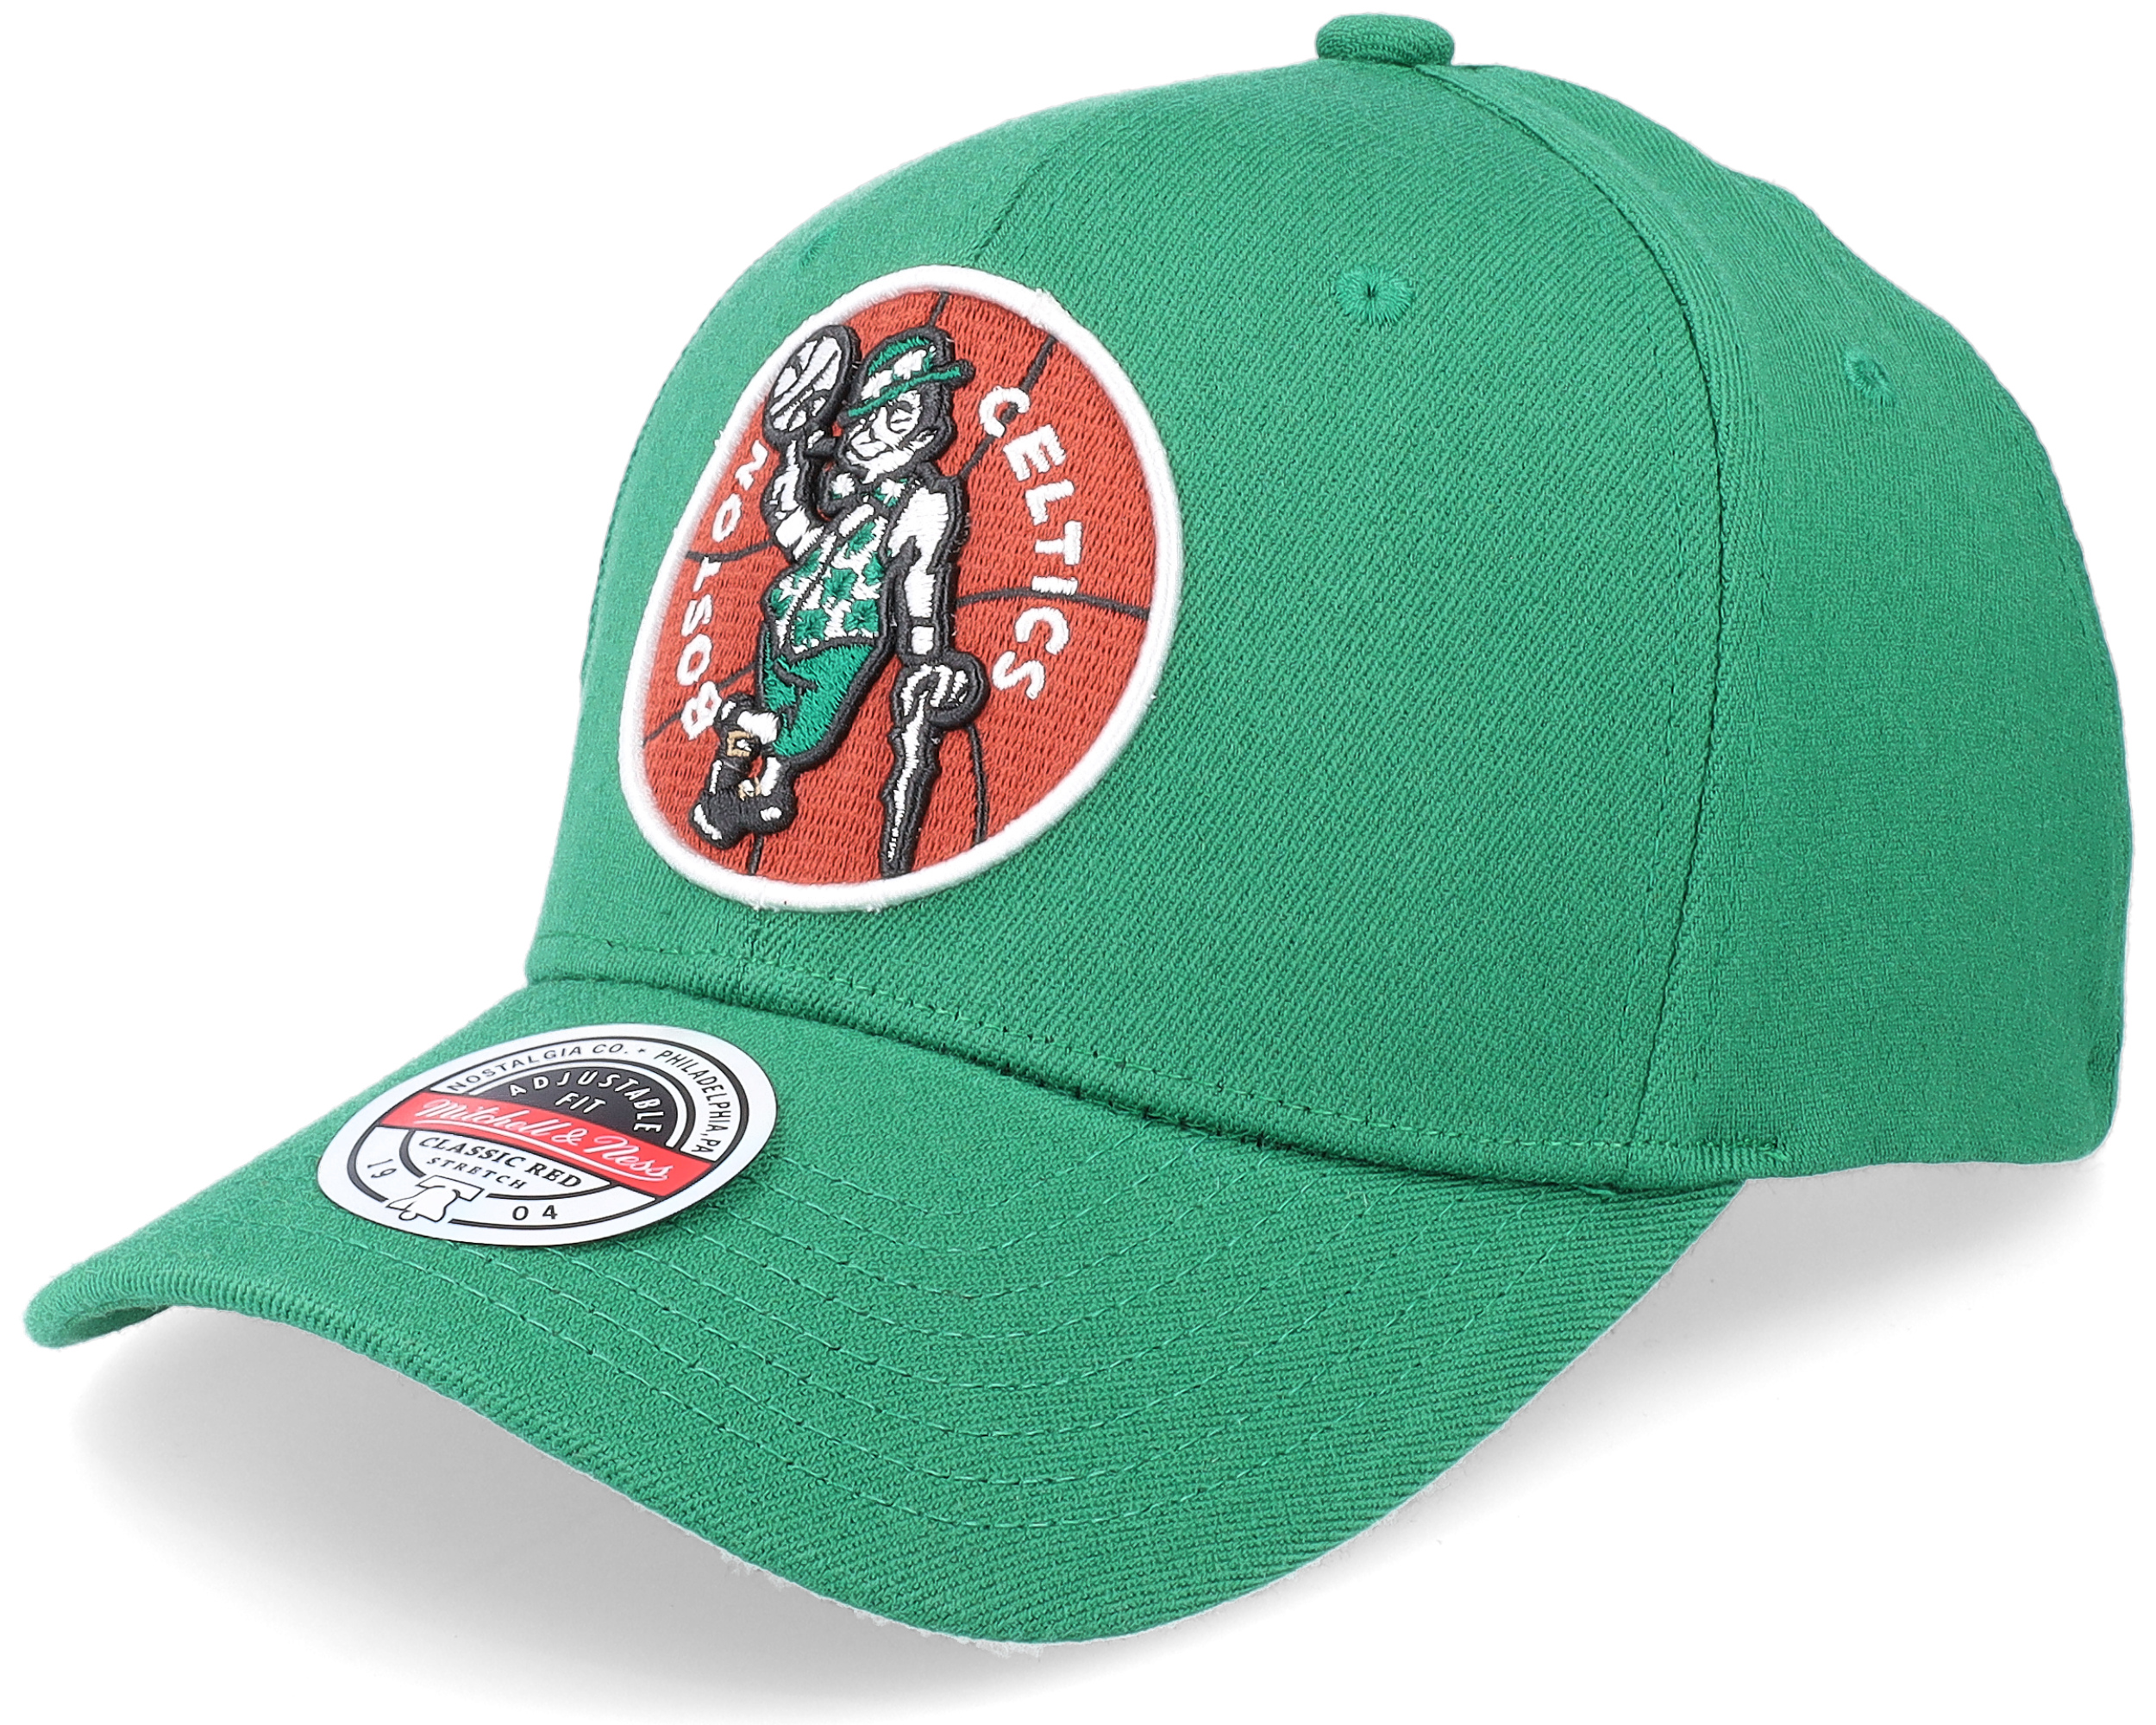 Boston Celtics Caps & Hats Online - hatstore.com.hk